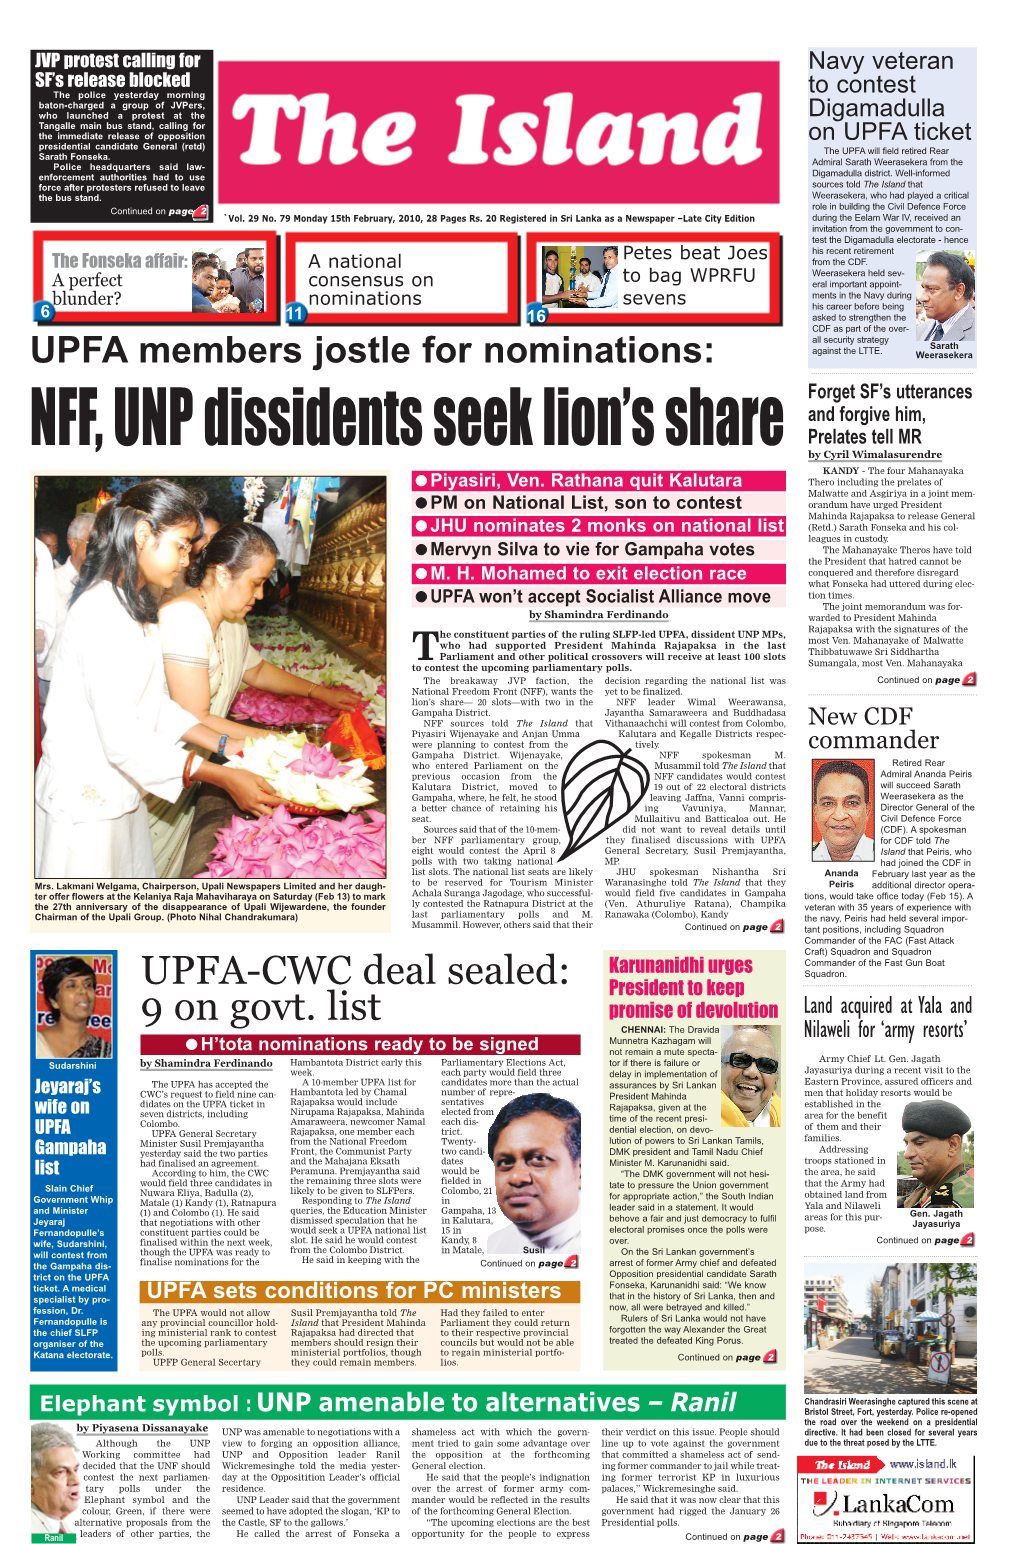 UPFA-CWC Deal Sealed: 9 on Govt. List